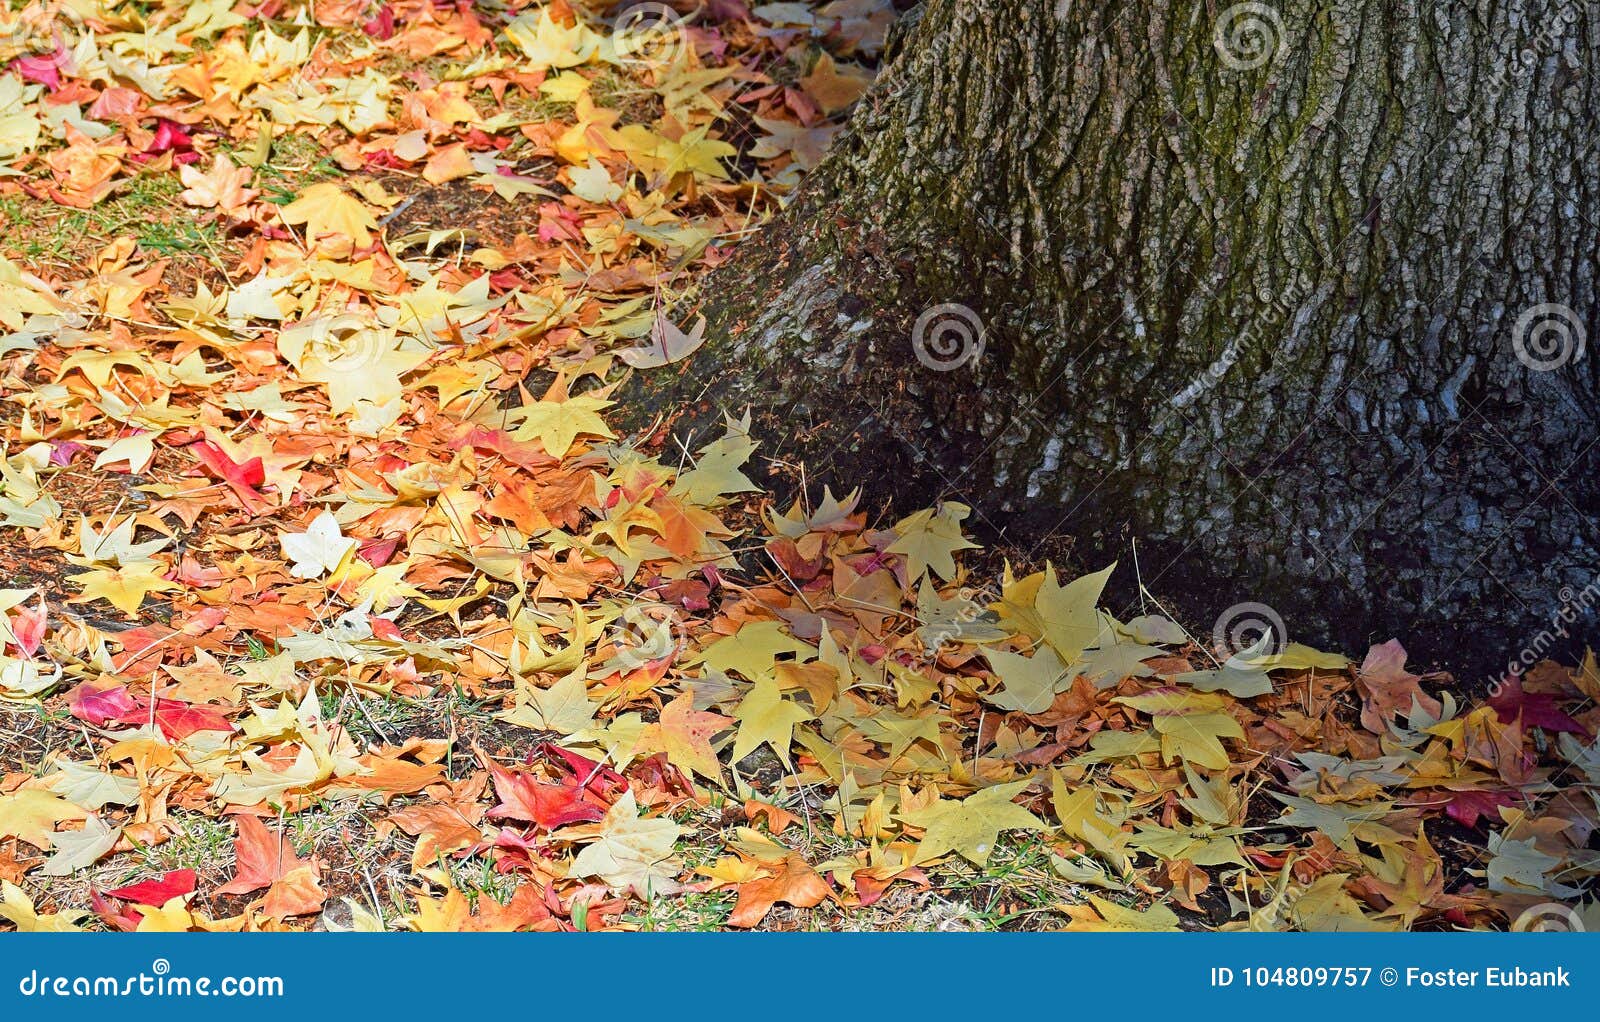 american sweetgum (liquidambar styraciflua) tree leaves on groun nd